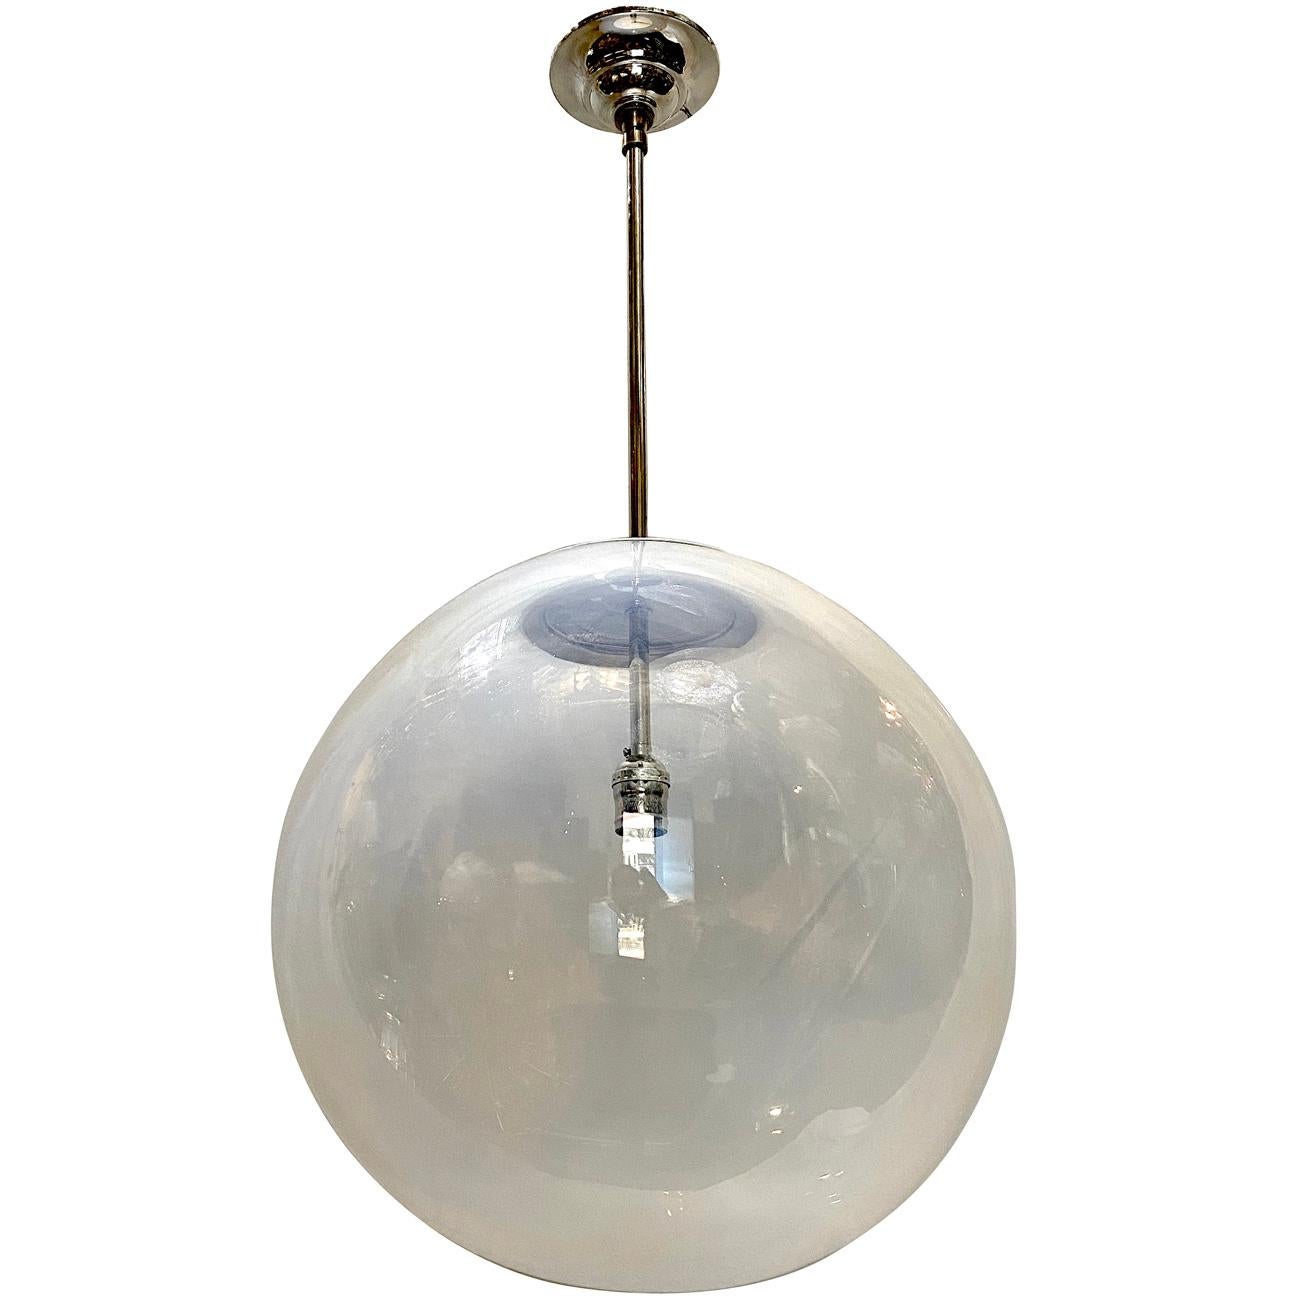 A circa 1960s large hand blown opaline glass light fixture with interior light.

Measurements:
Diameter 16